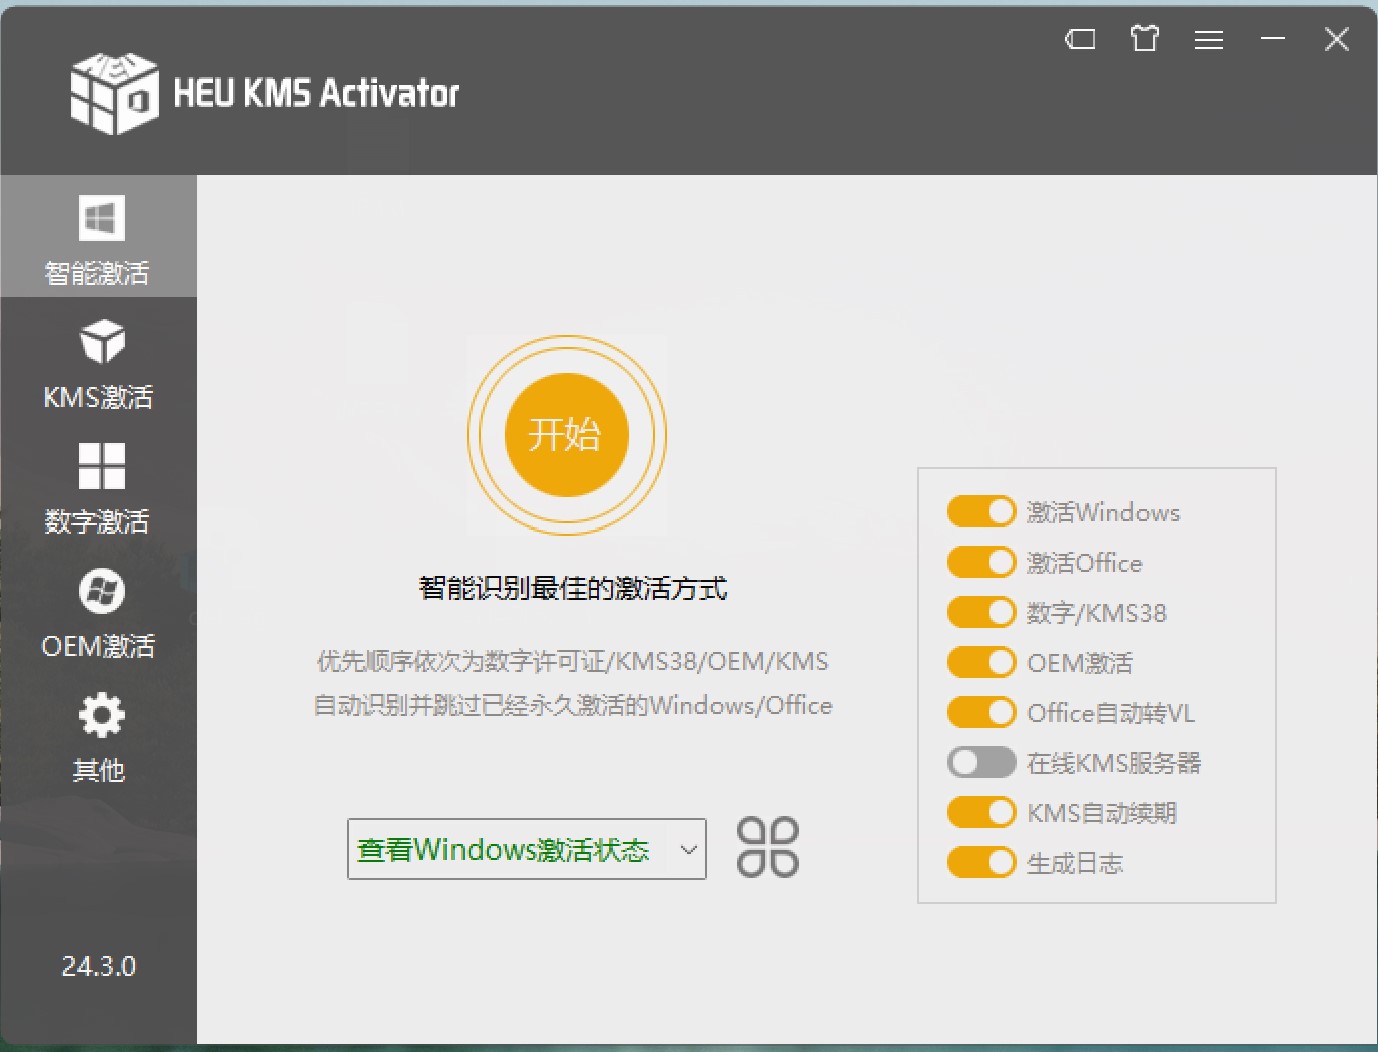 微软Windows & Office 激活工具 HEU KMS Activator